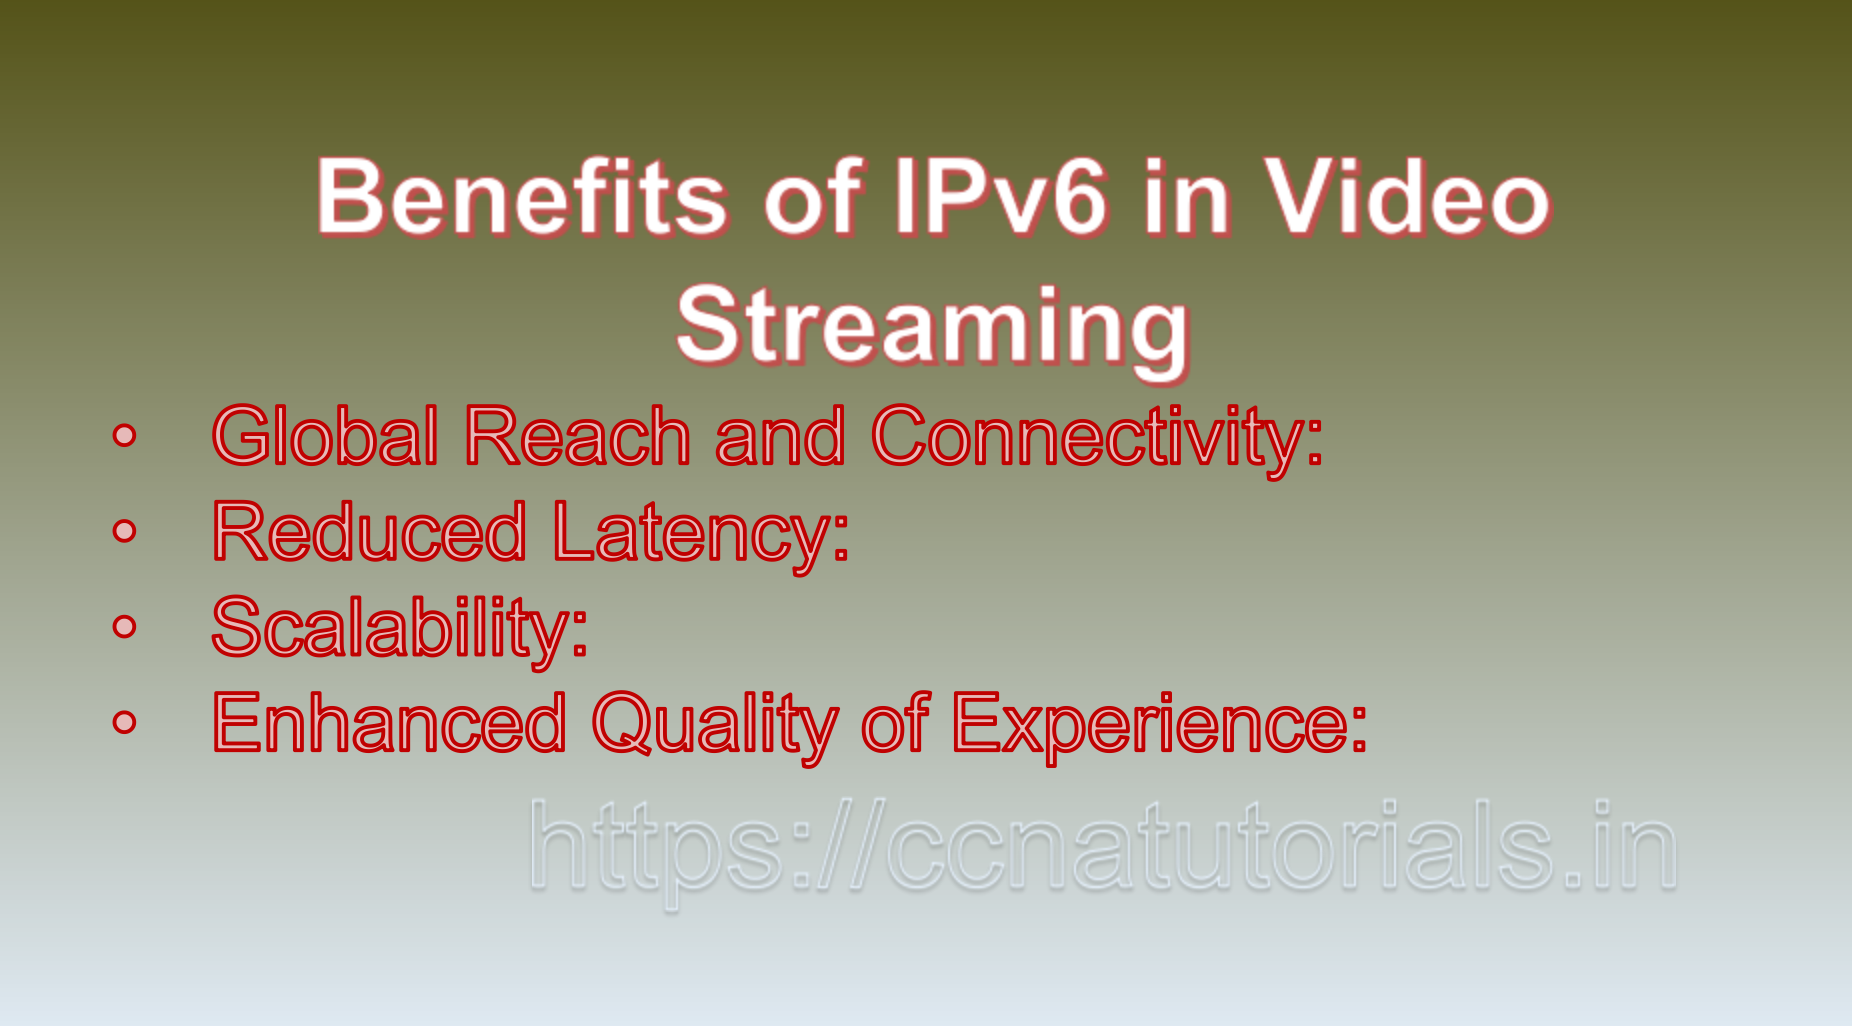 IPv6 and Video Streaming, ccna, ccna tutorials